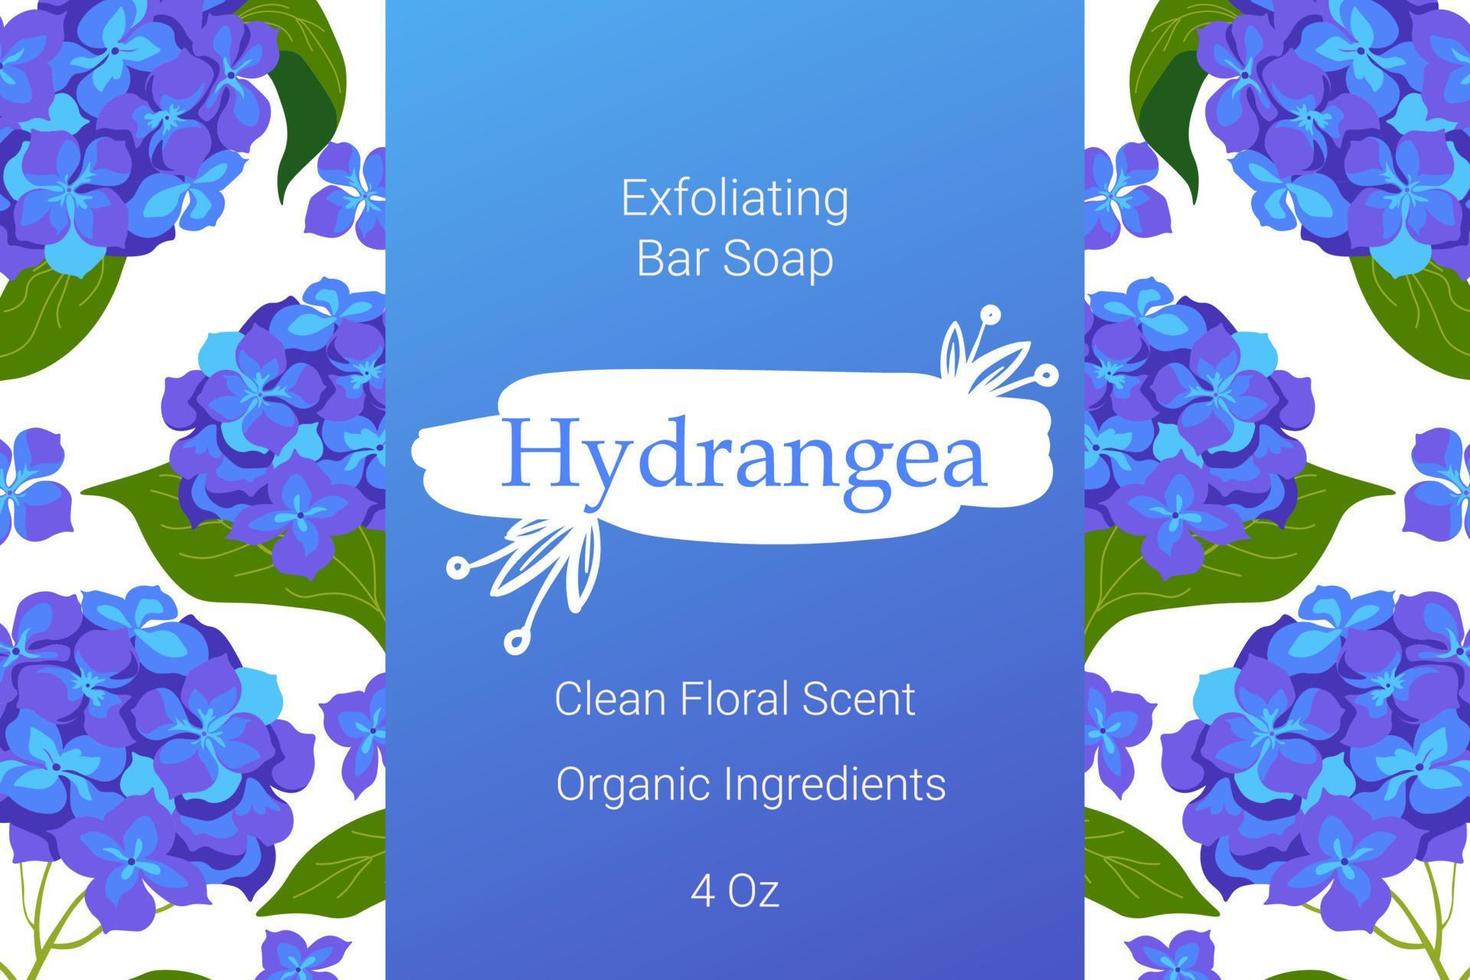 Hydrangea exfoliating bar soap emblem banners vector